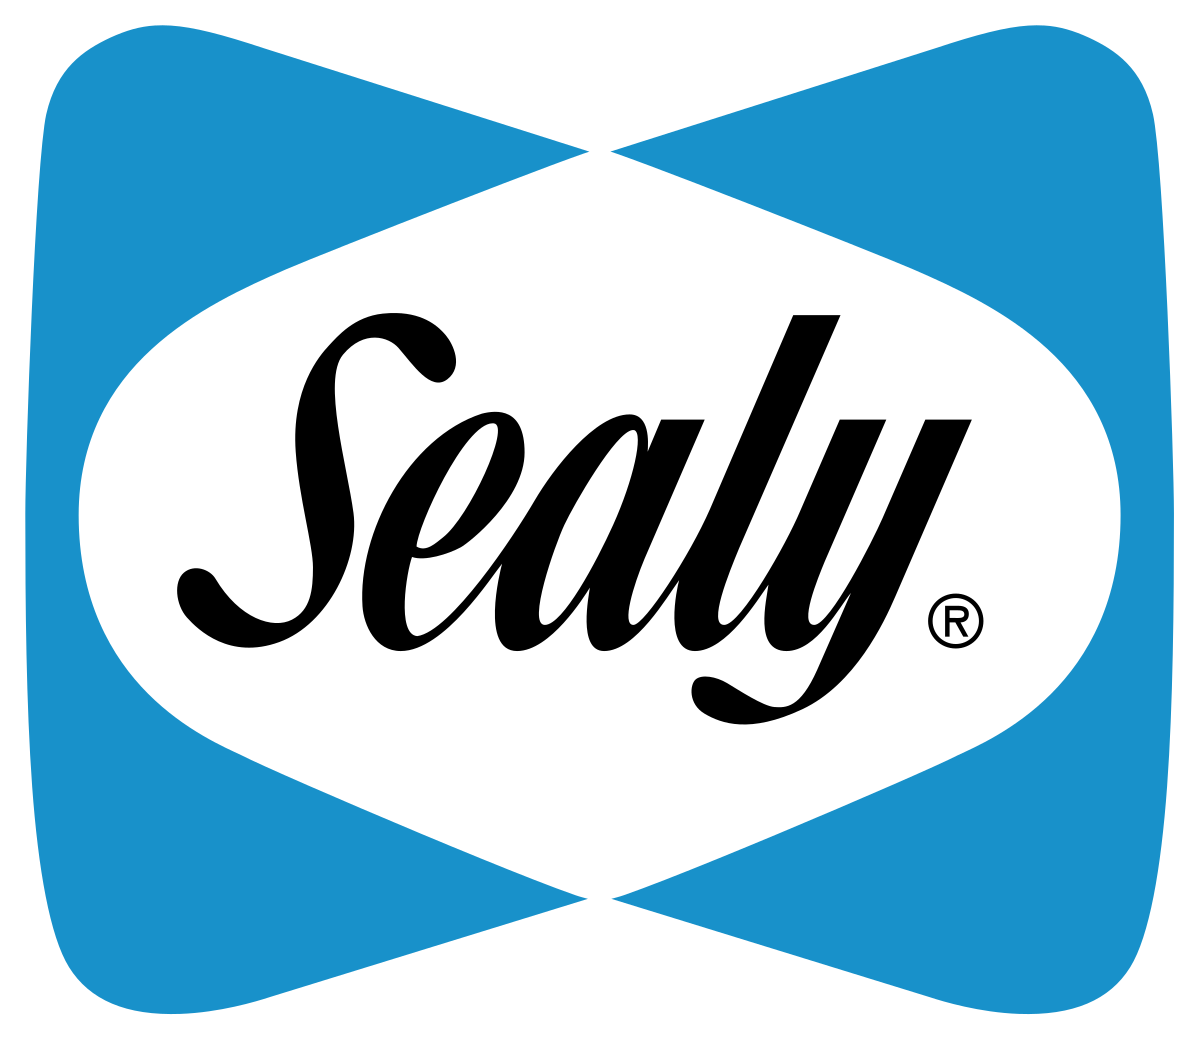 Sealy_Corporation